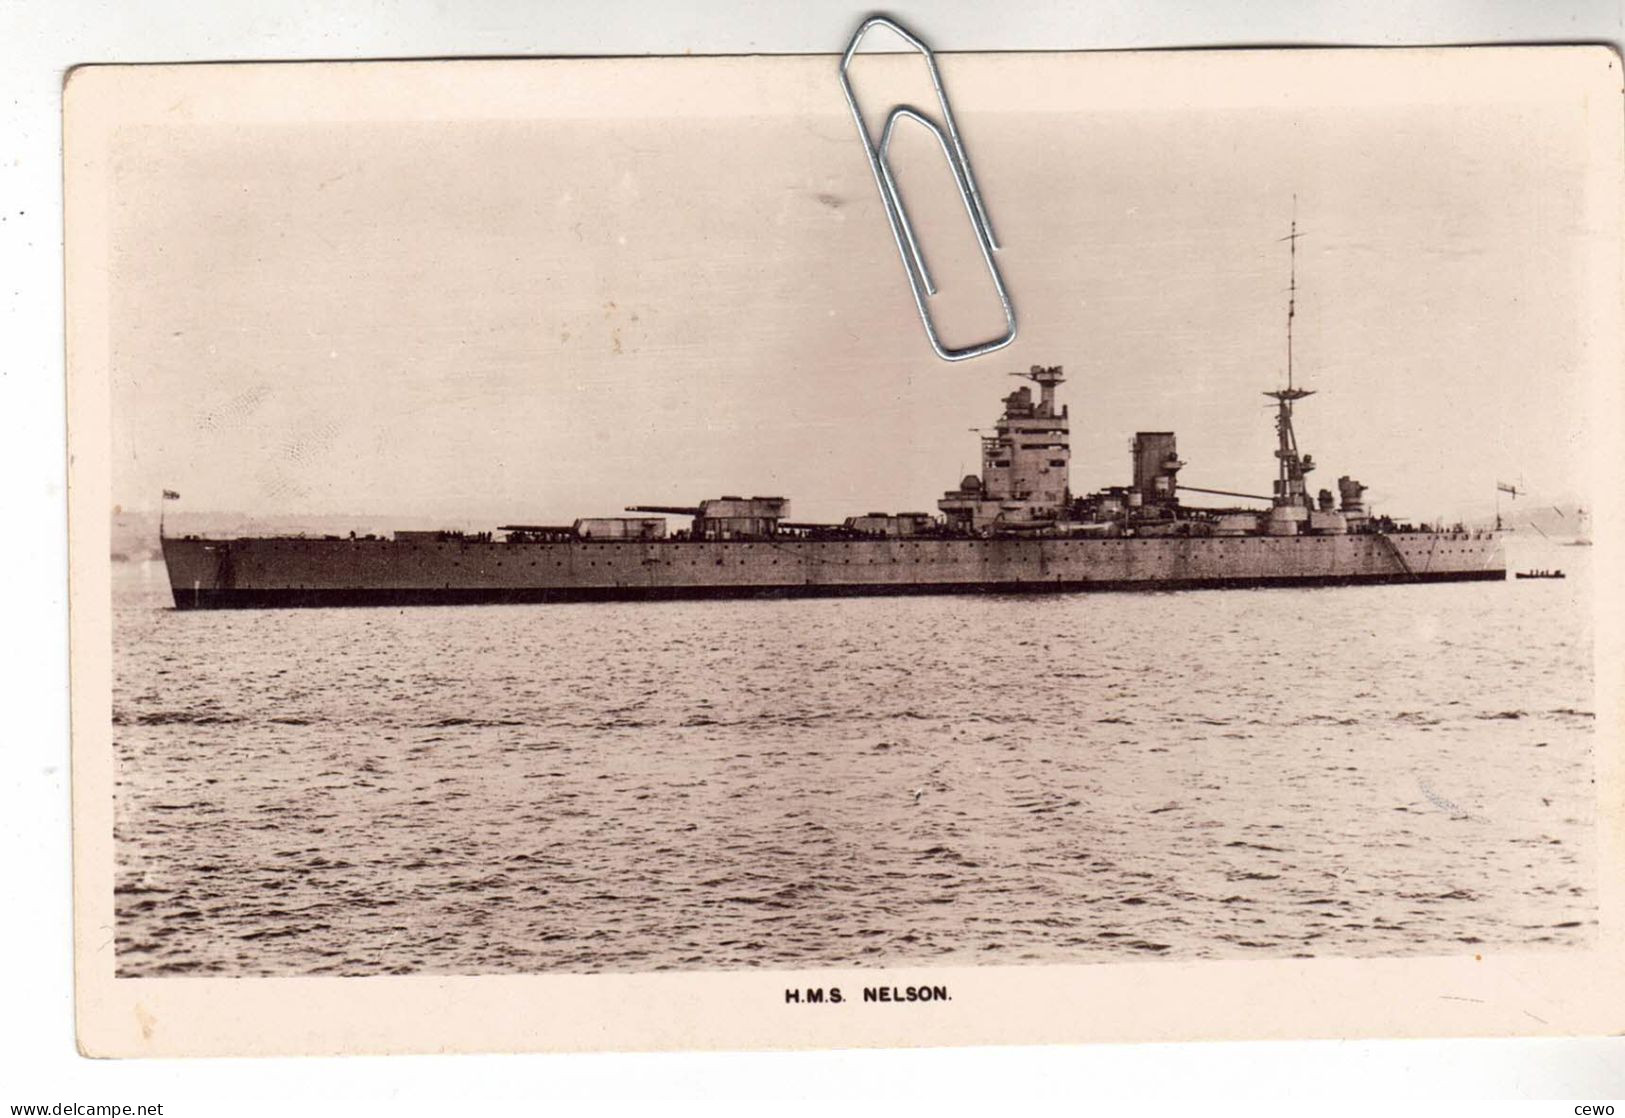 CPA MARINE NAVIRE DE GUERRE CUIRASSE ANGLAIS HMS H.M.S. RODNEY - Guerra